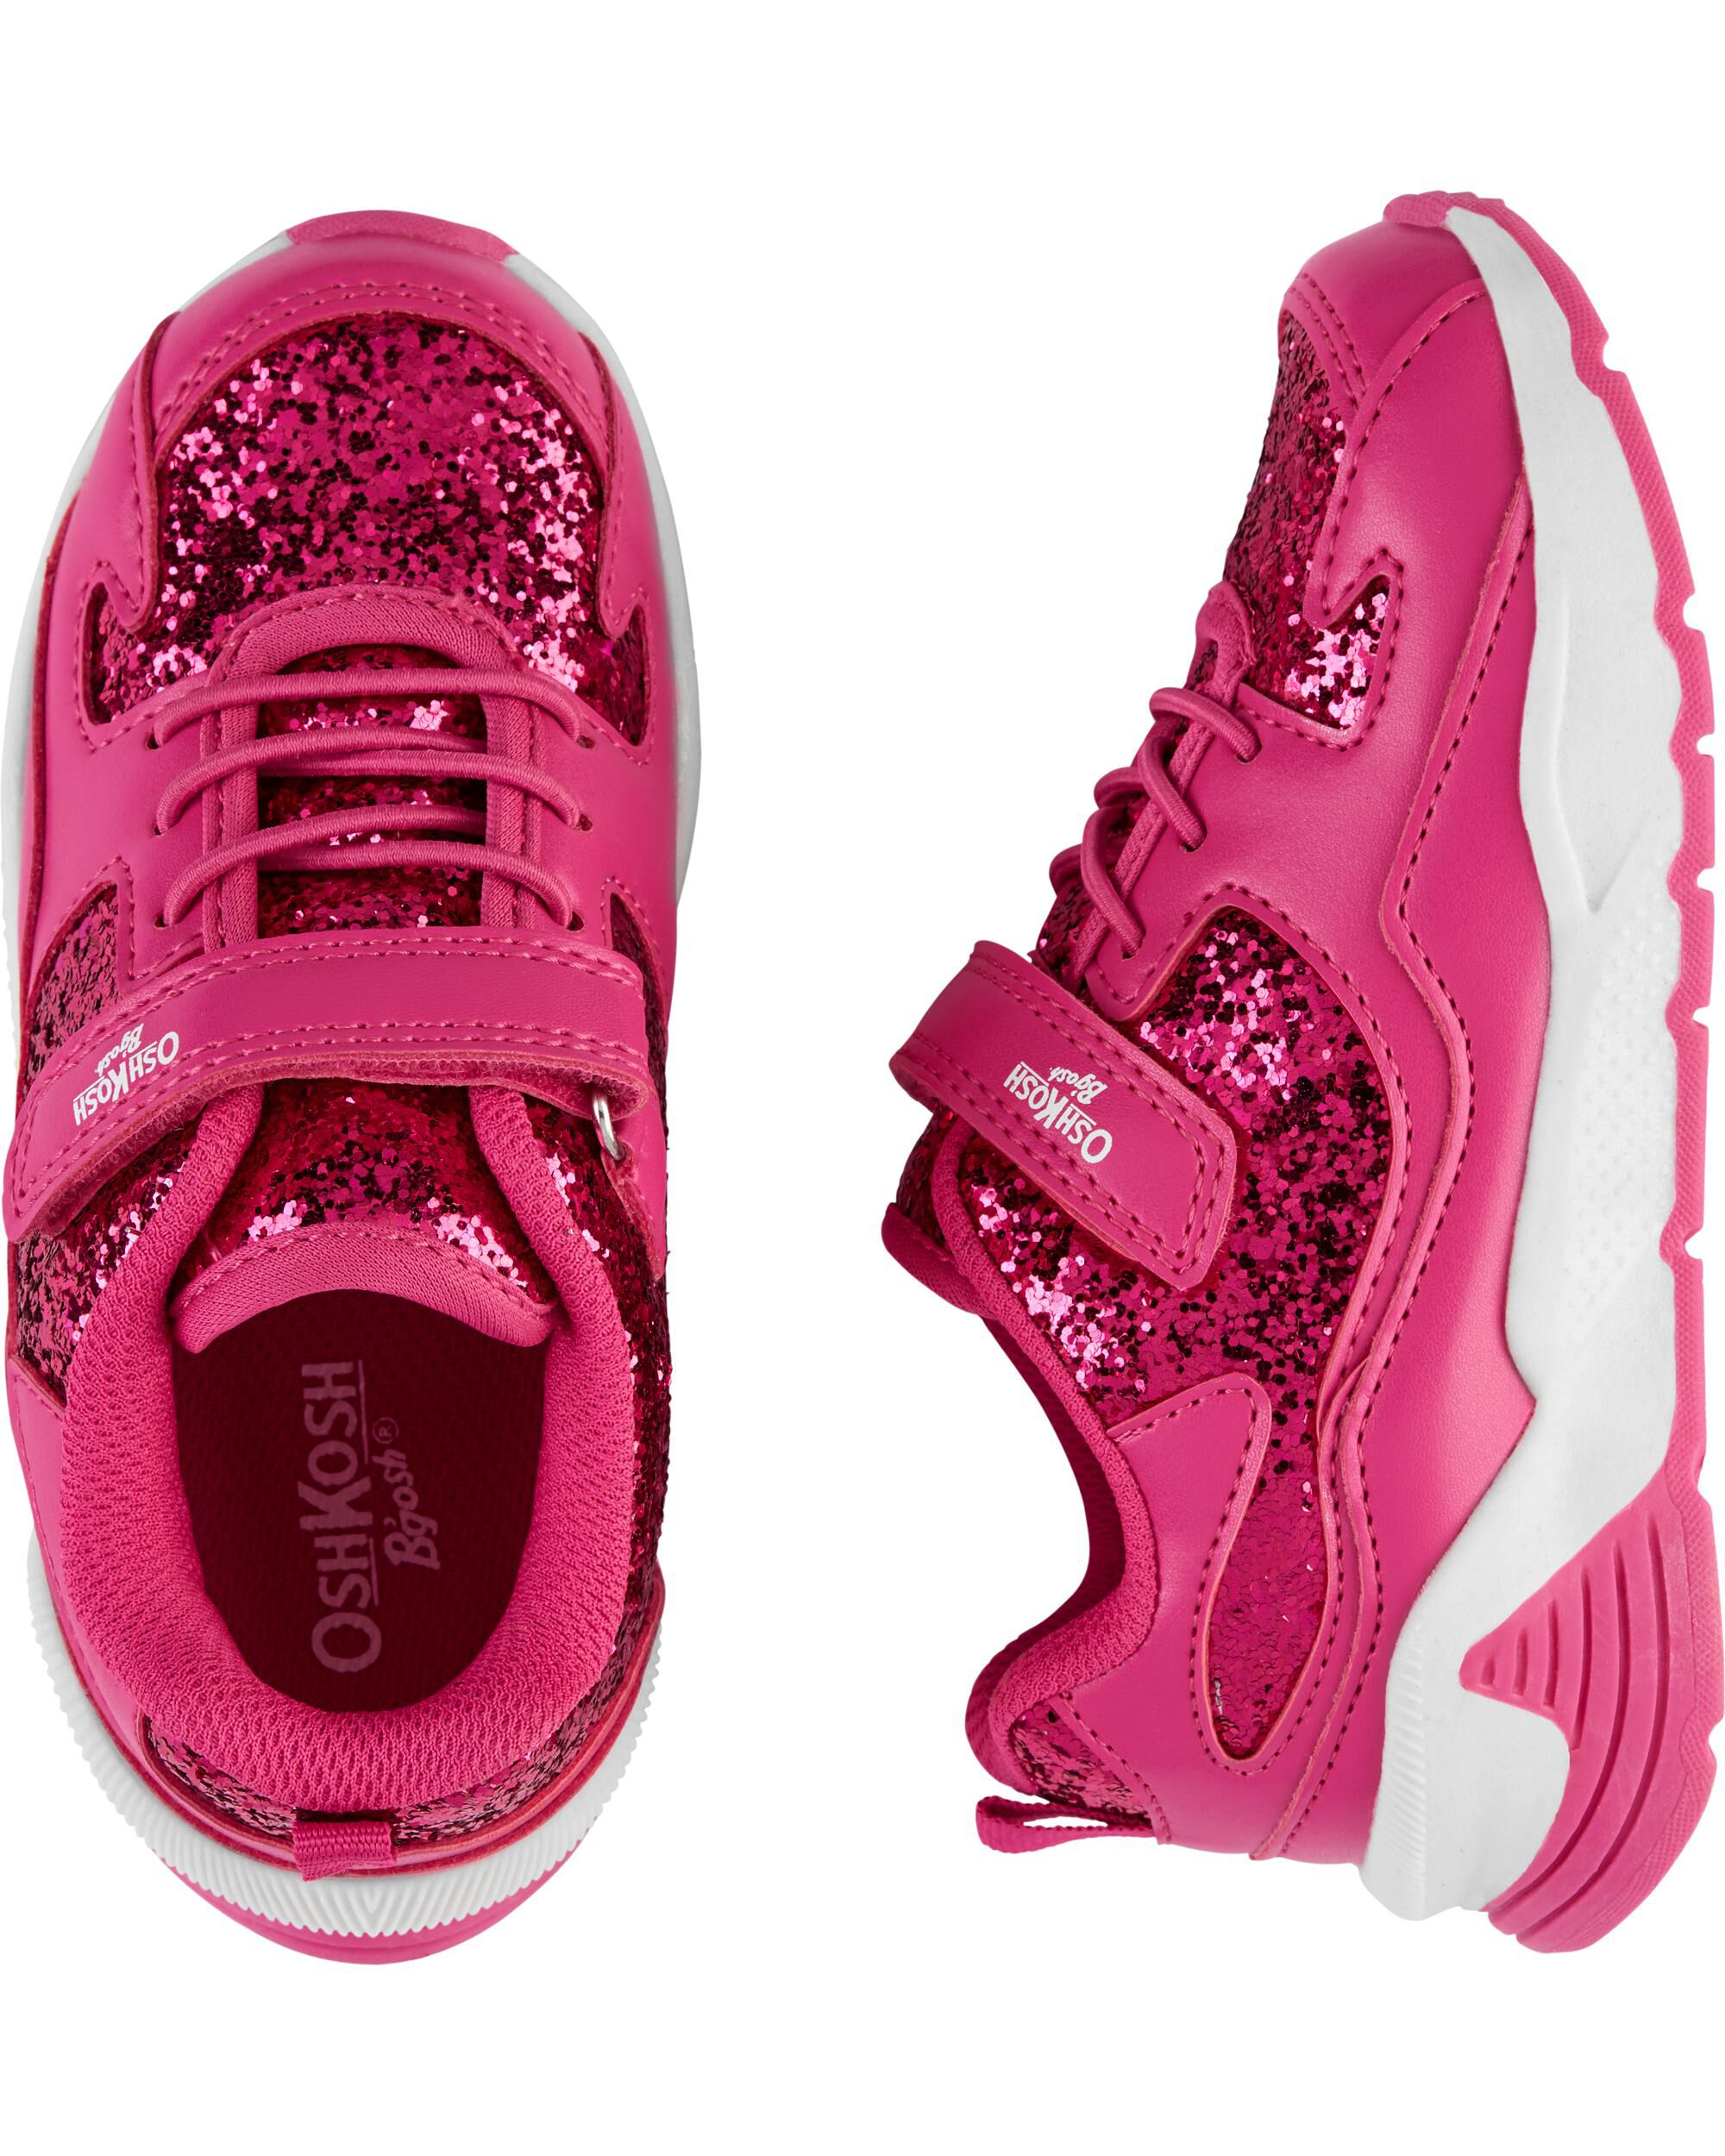 OshKosh Pink Glitter Sneakers | oshkosh.com